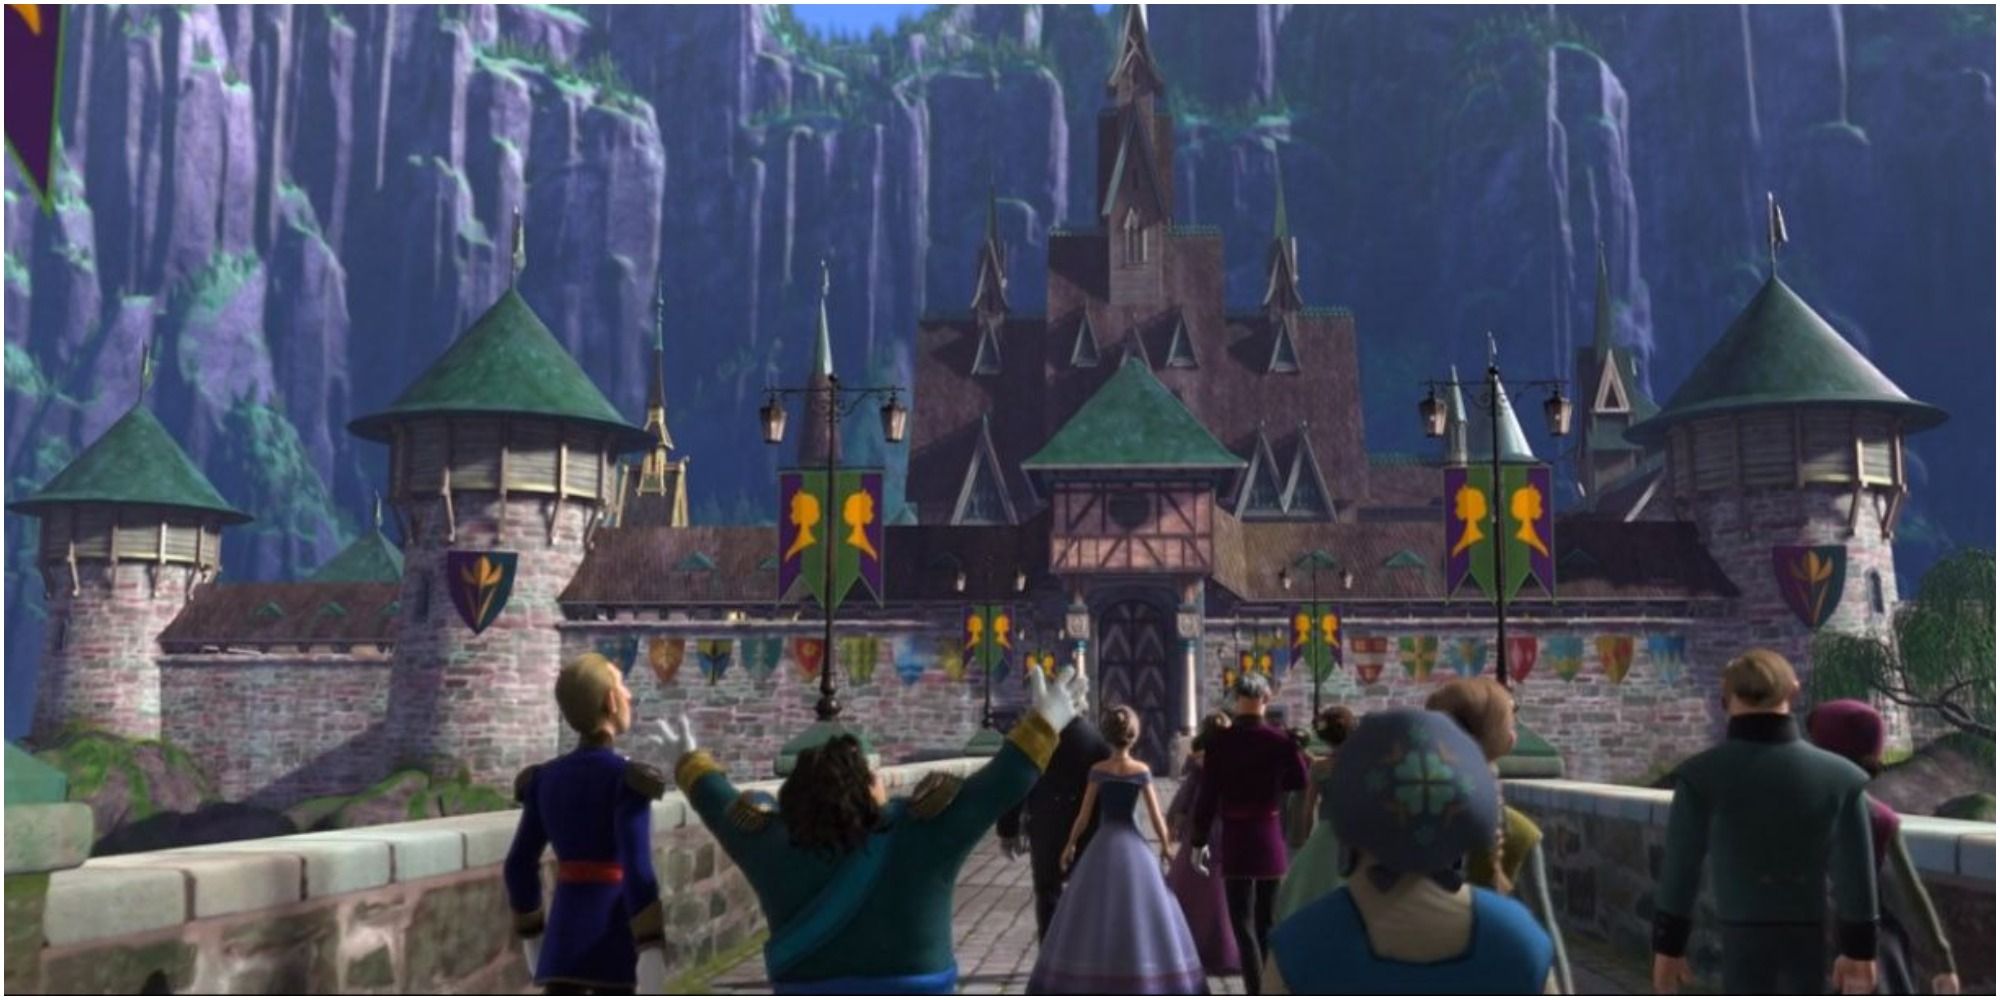 The Kingdom of Arendelle as seen in Frozen 2